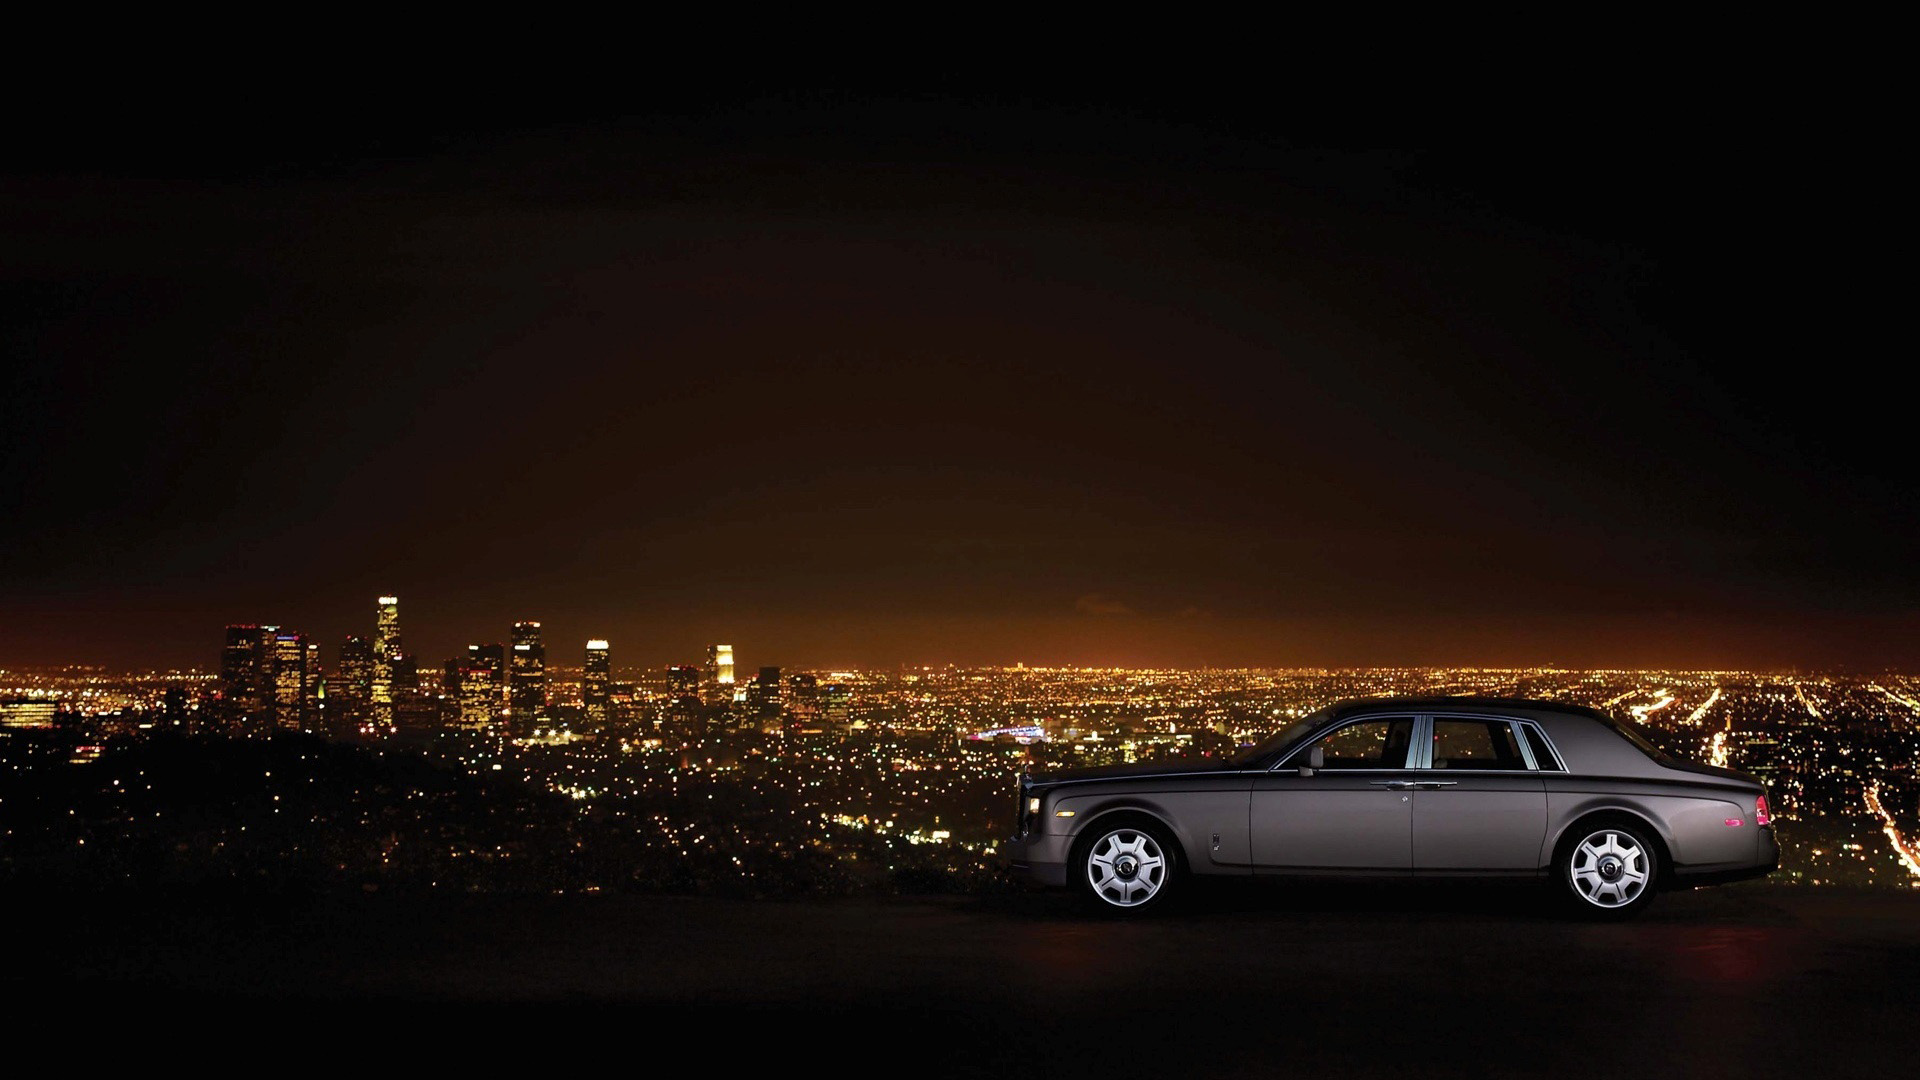 Night city scenery car desktop wallpaper